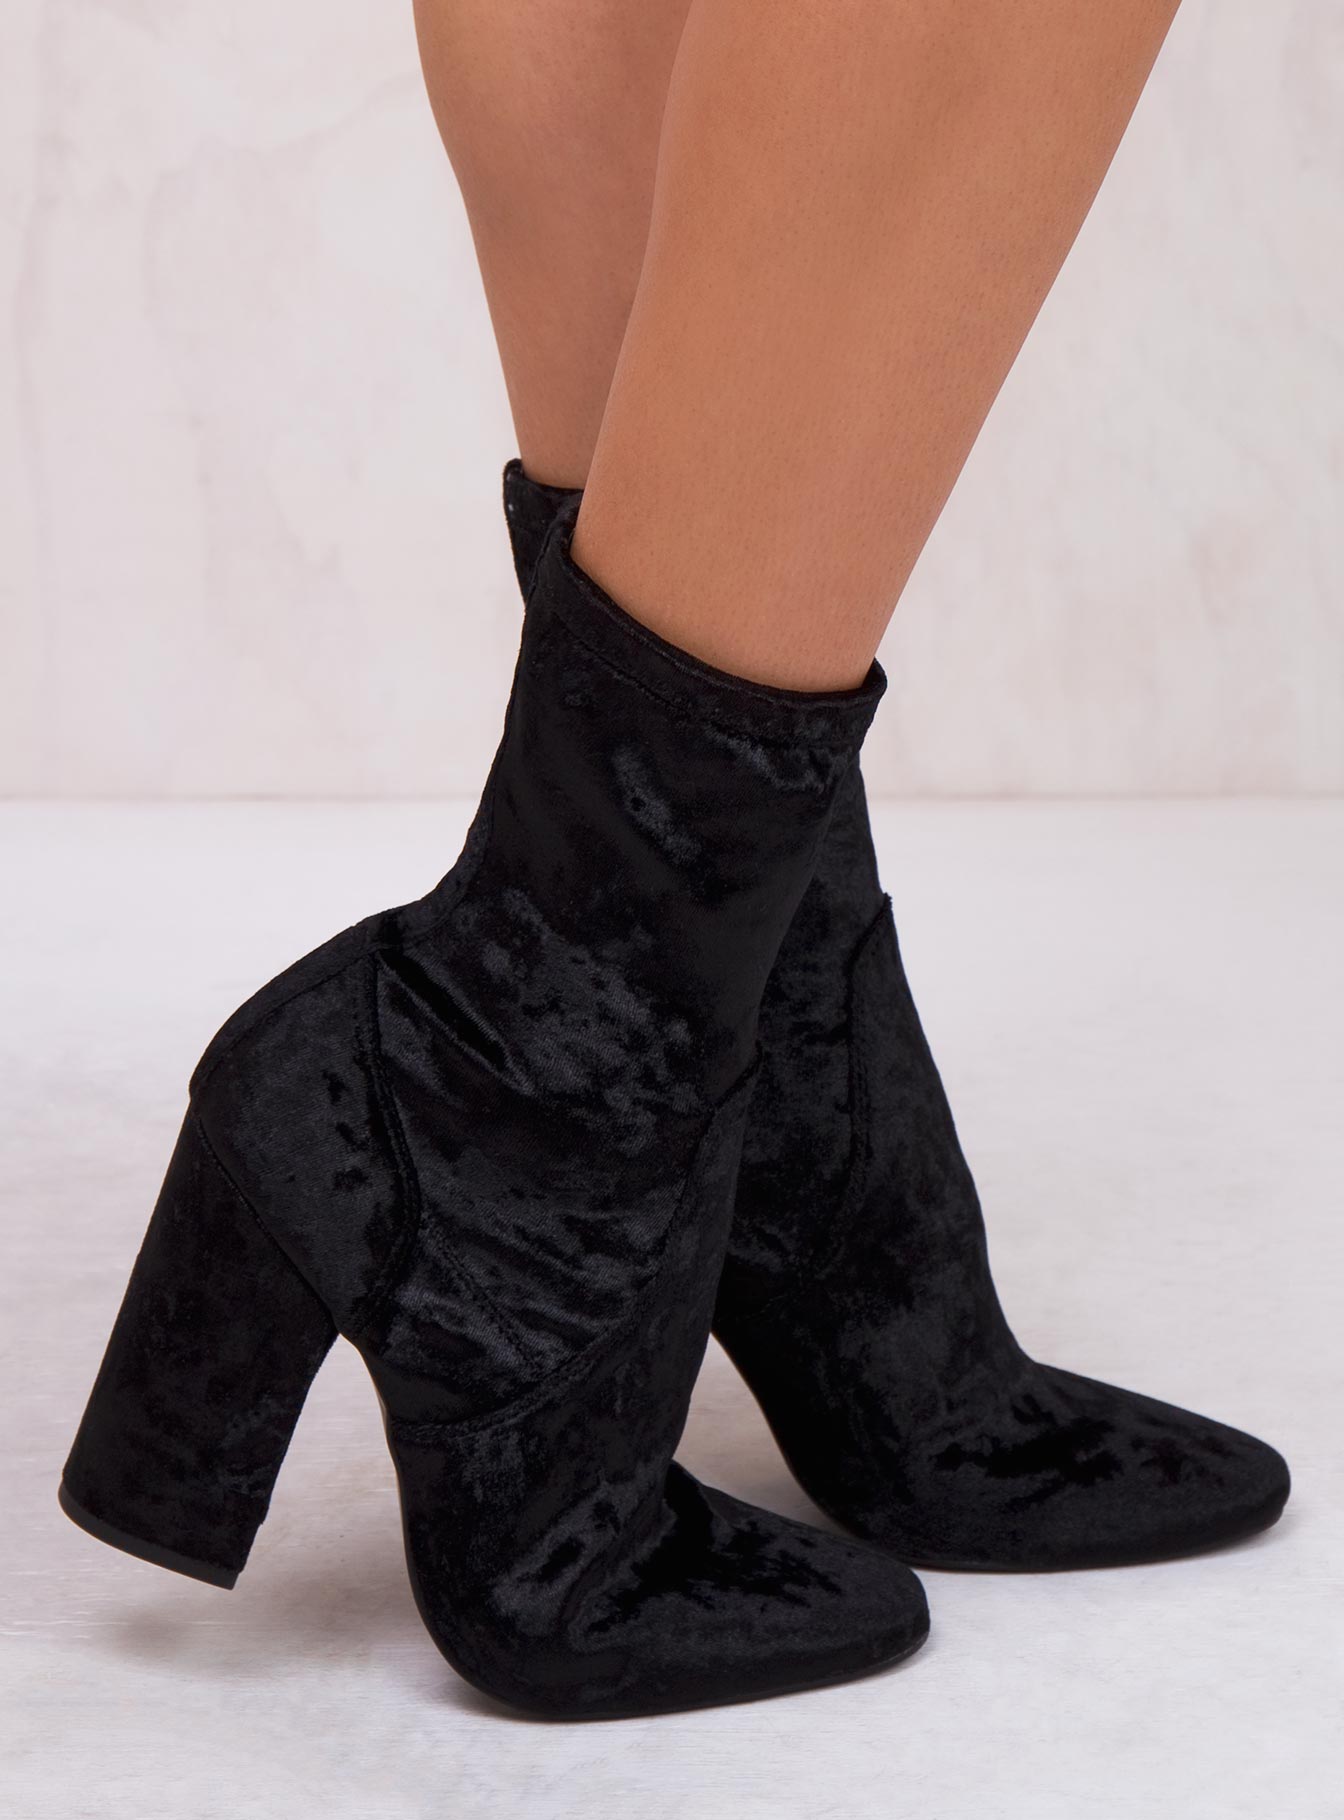 windsor smith sock boots